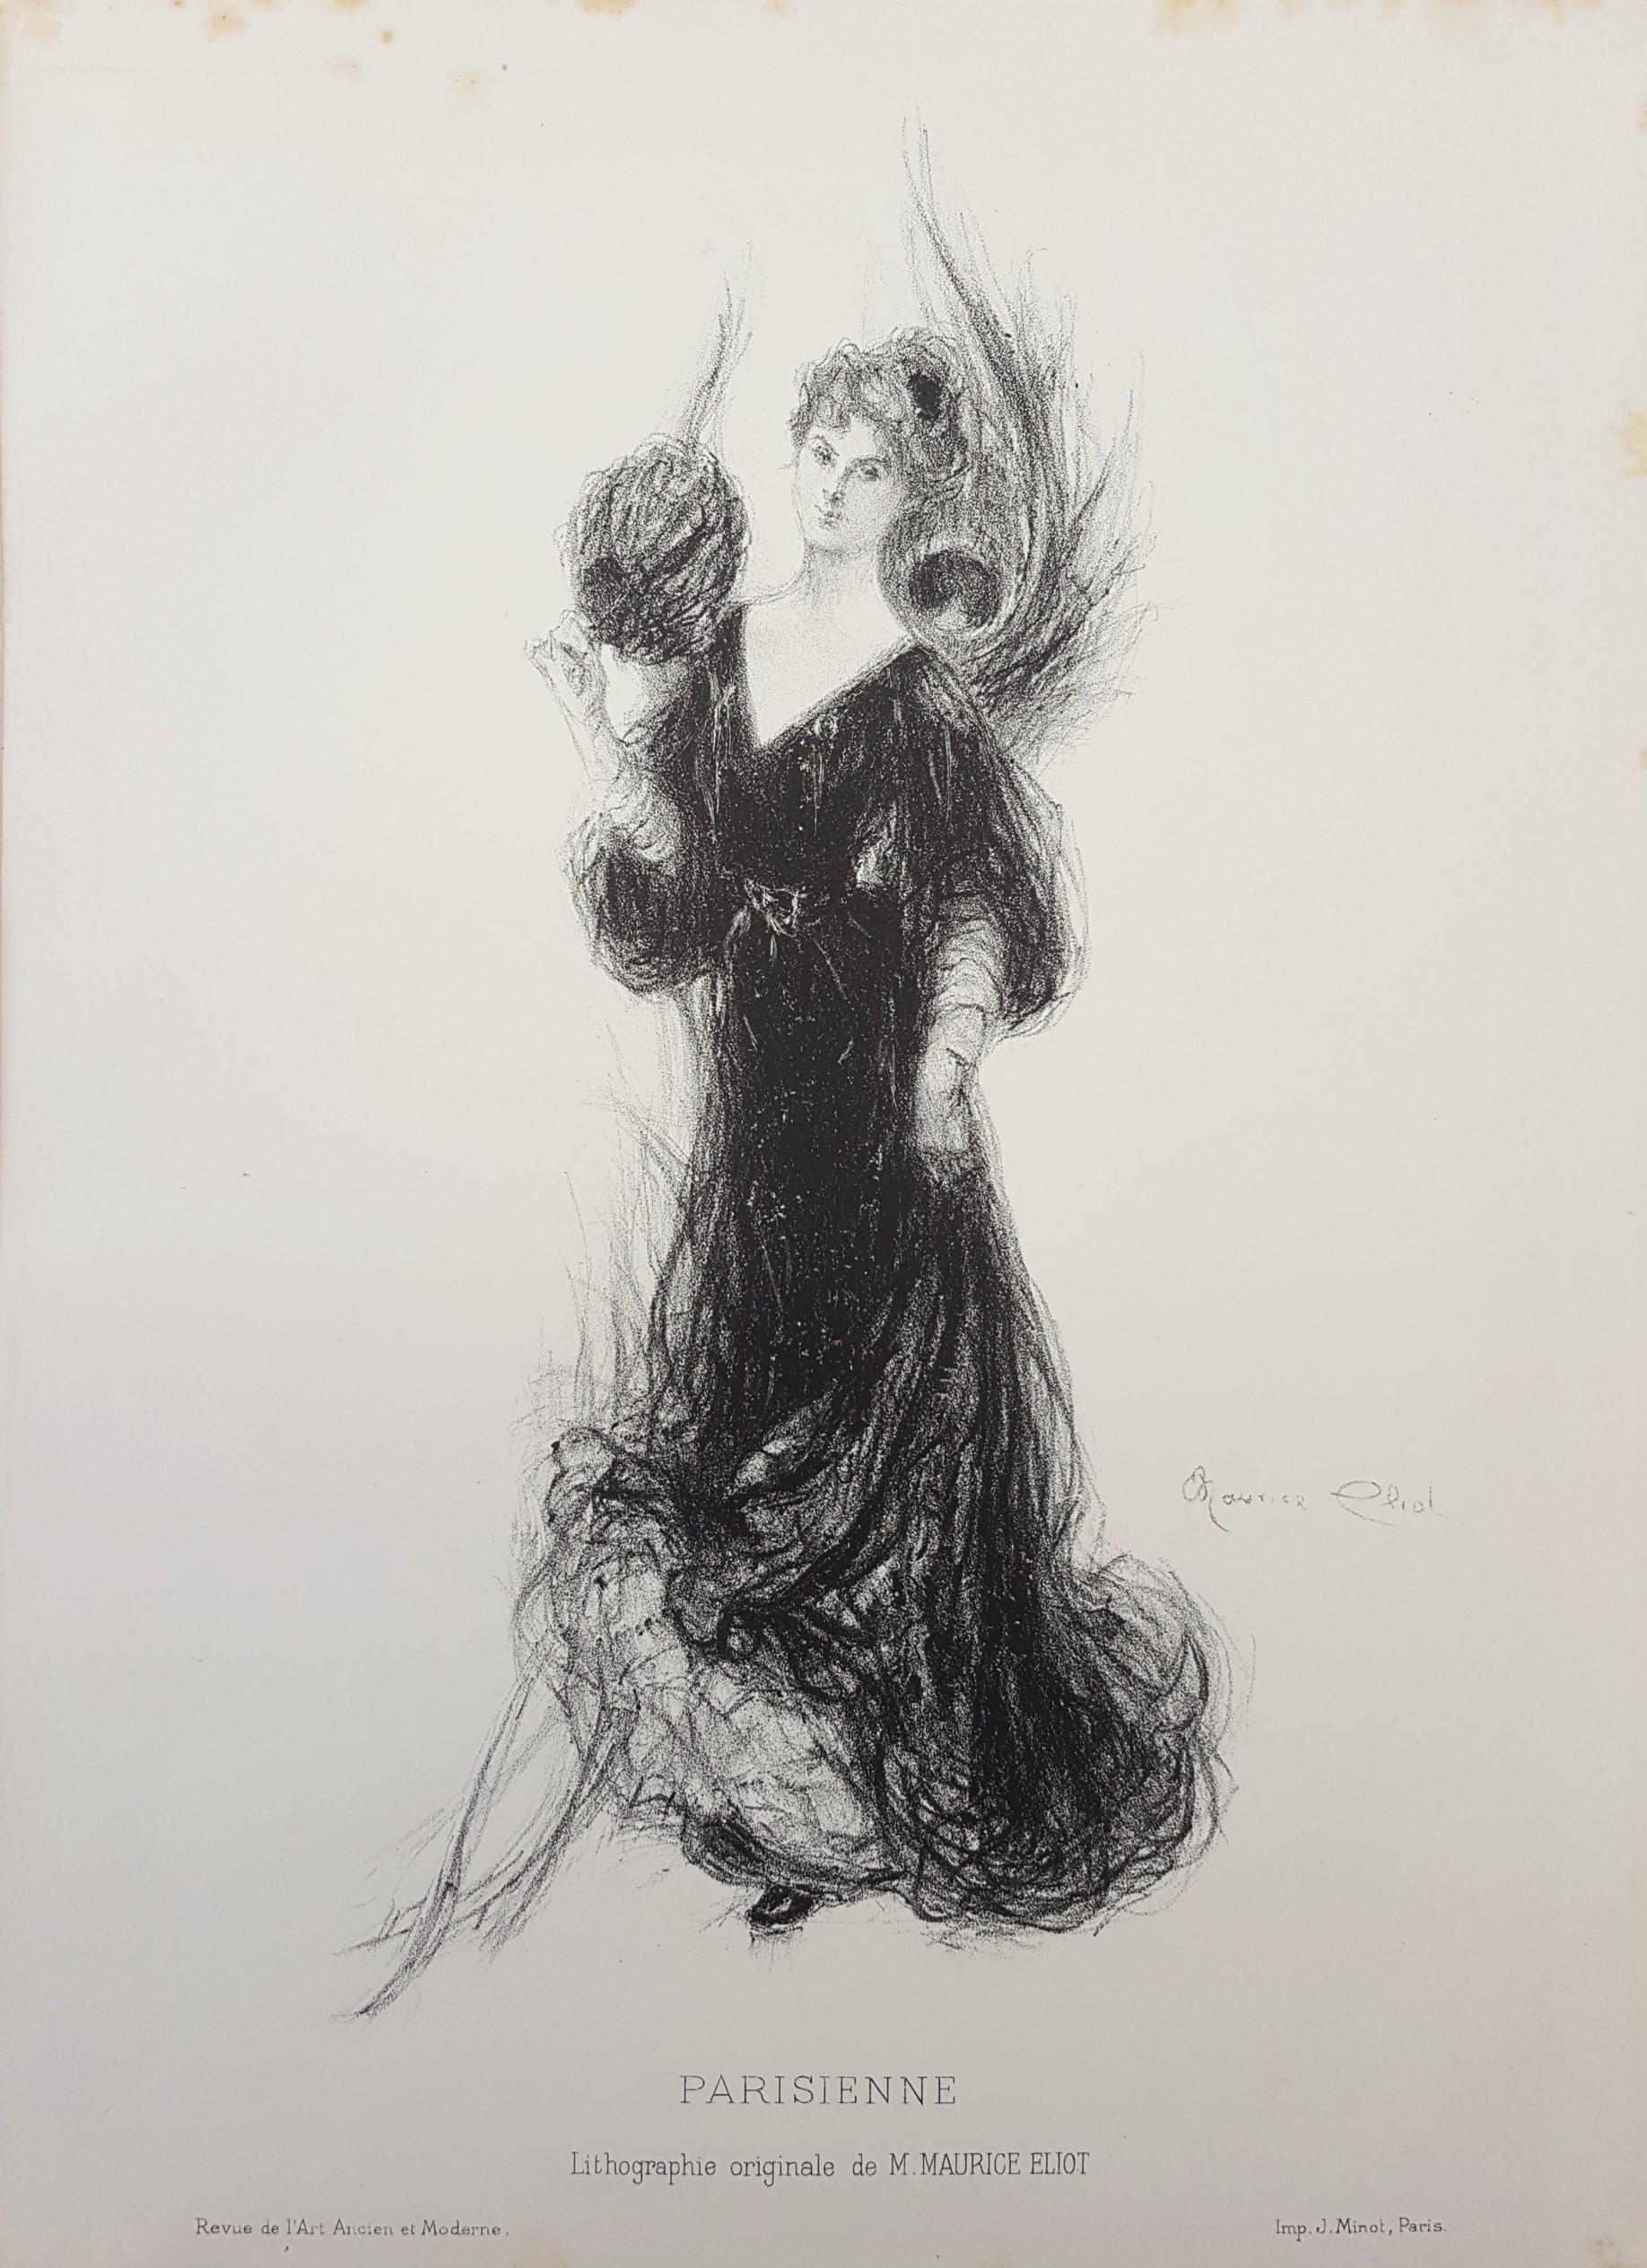 Parisienne /// Art Nouveau French Lithograph Impressionist Figurative Lady Woman - Print by Maurice Eliot